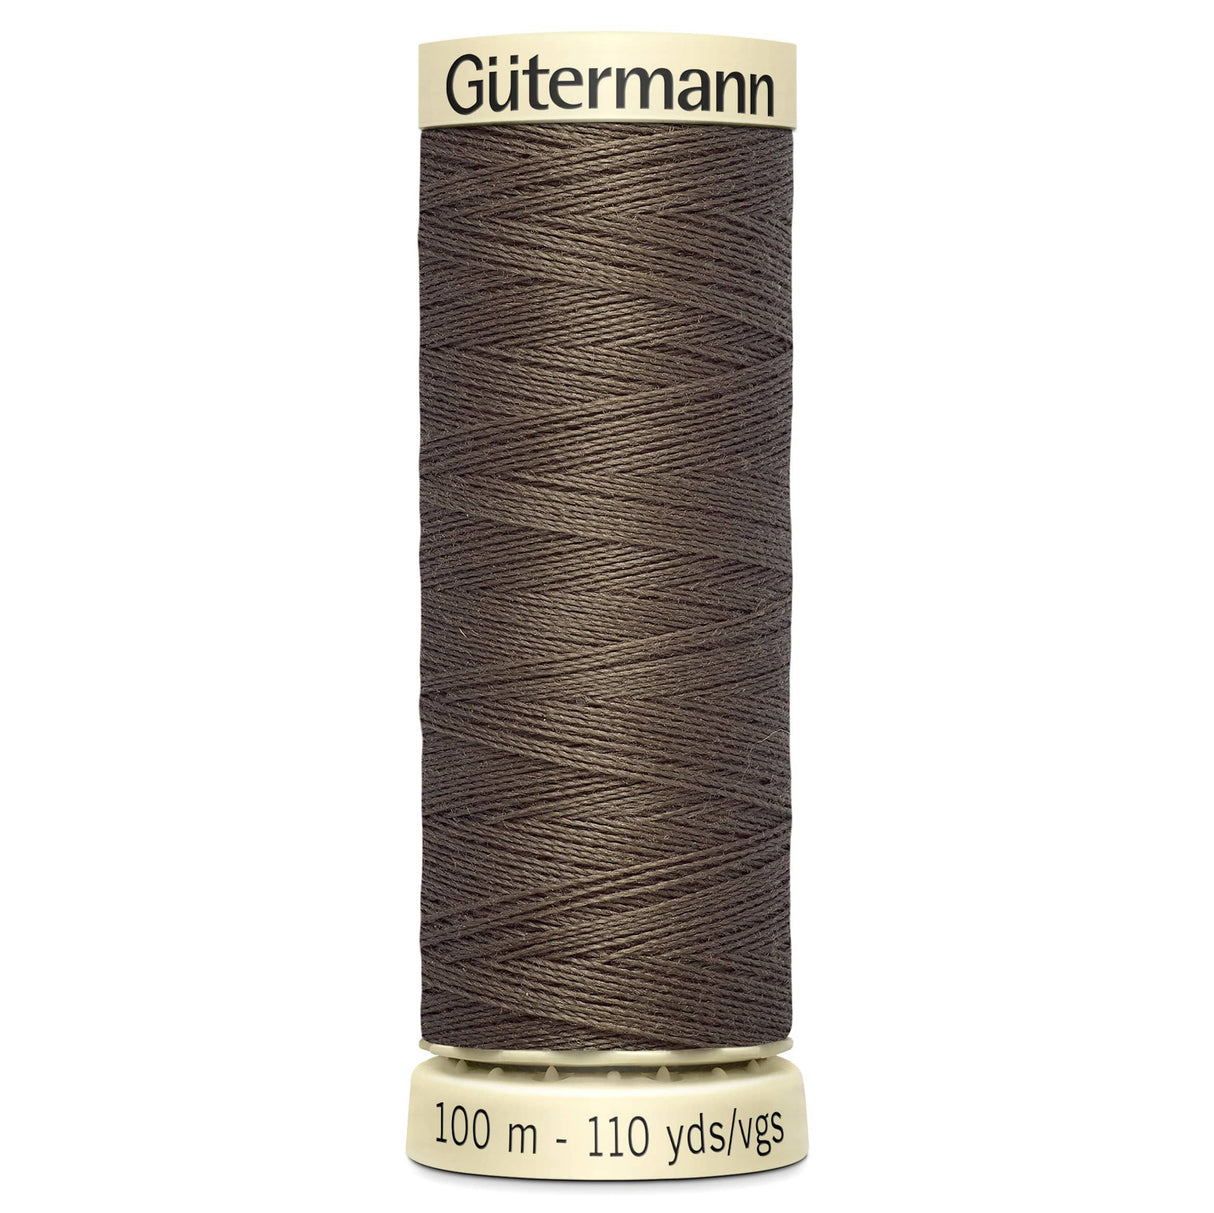 Groves Haberdashery 467 Gutermann Thread Sewing Cotton 100 m Black to Pink